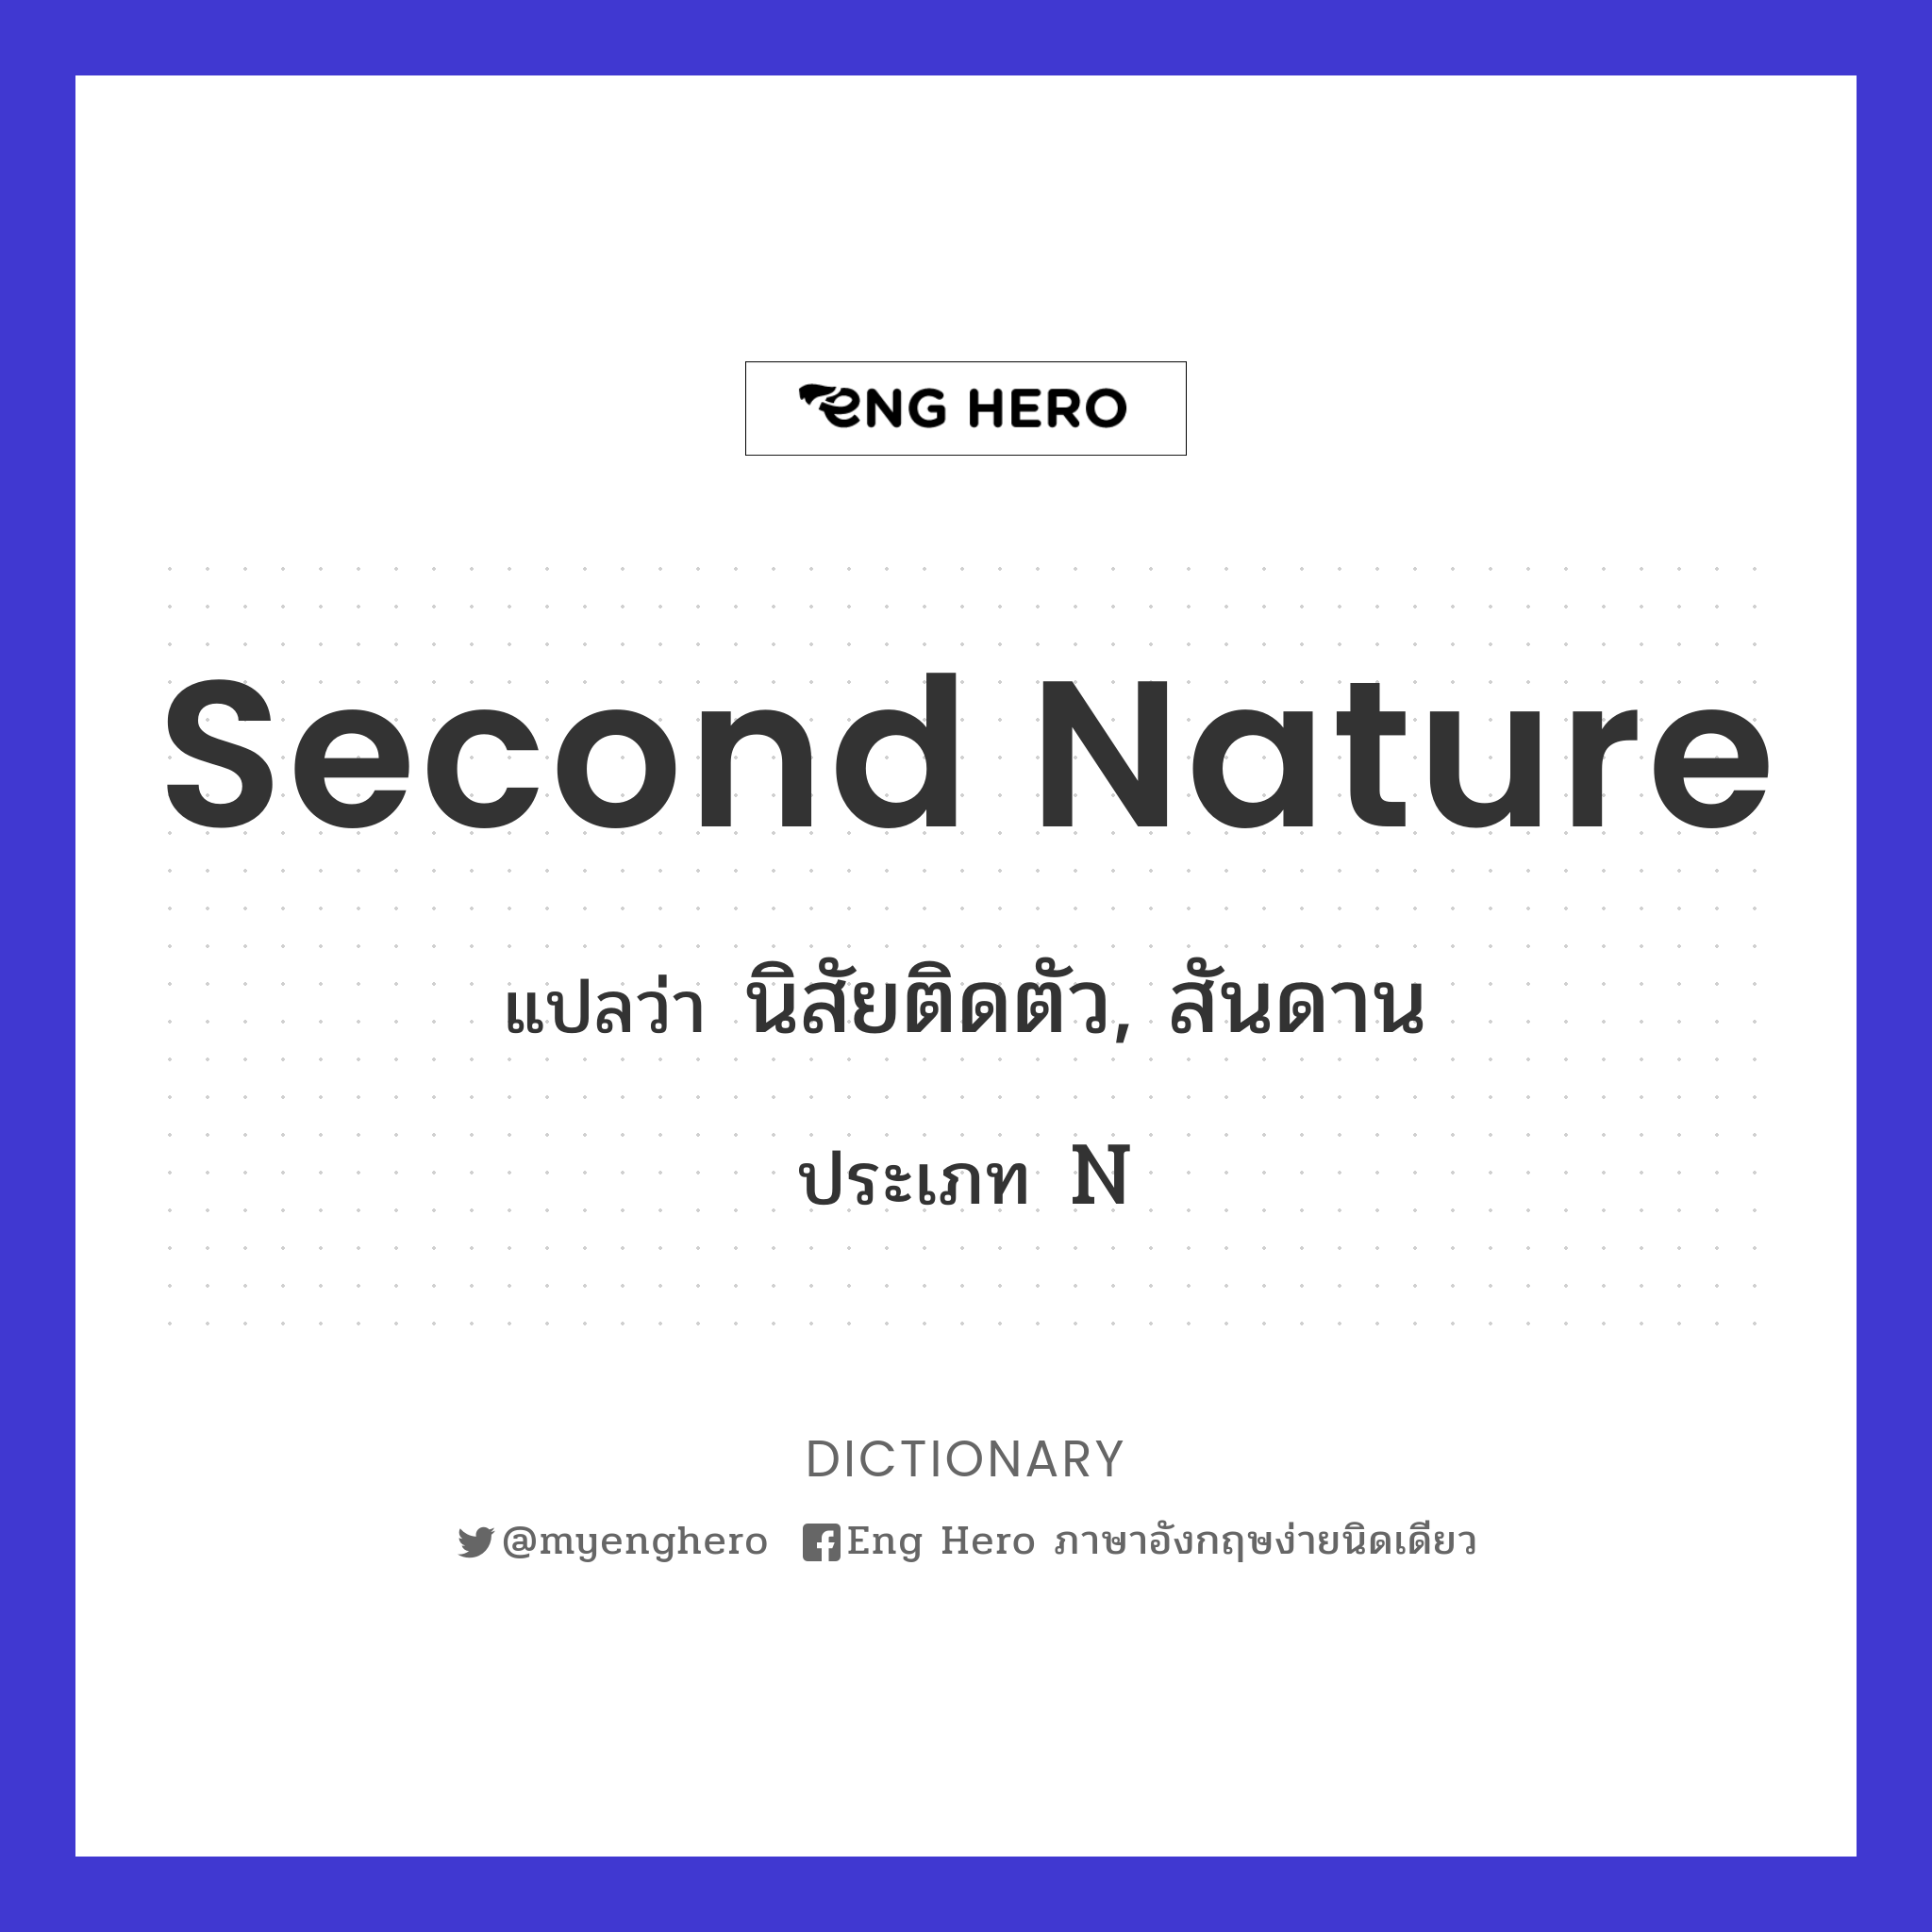 second nature